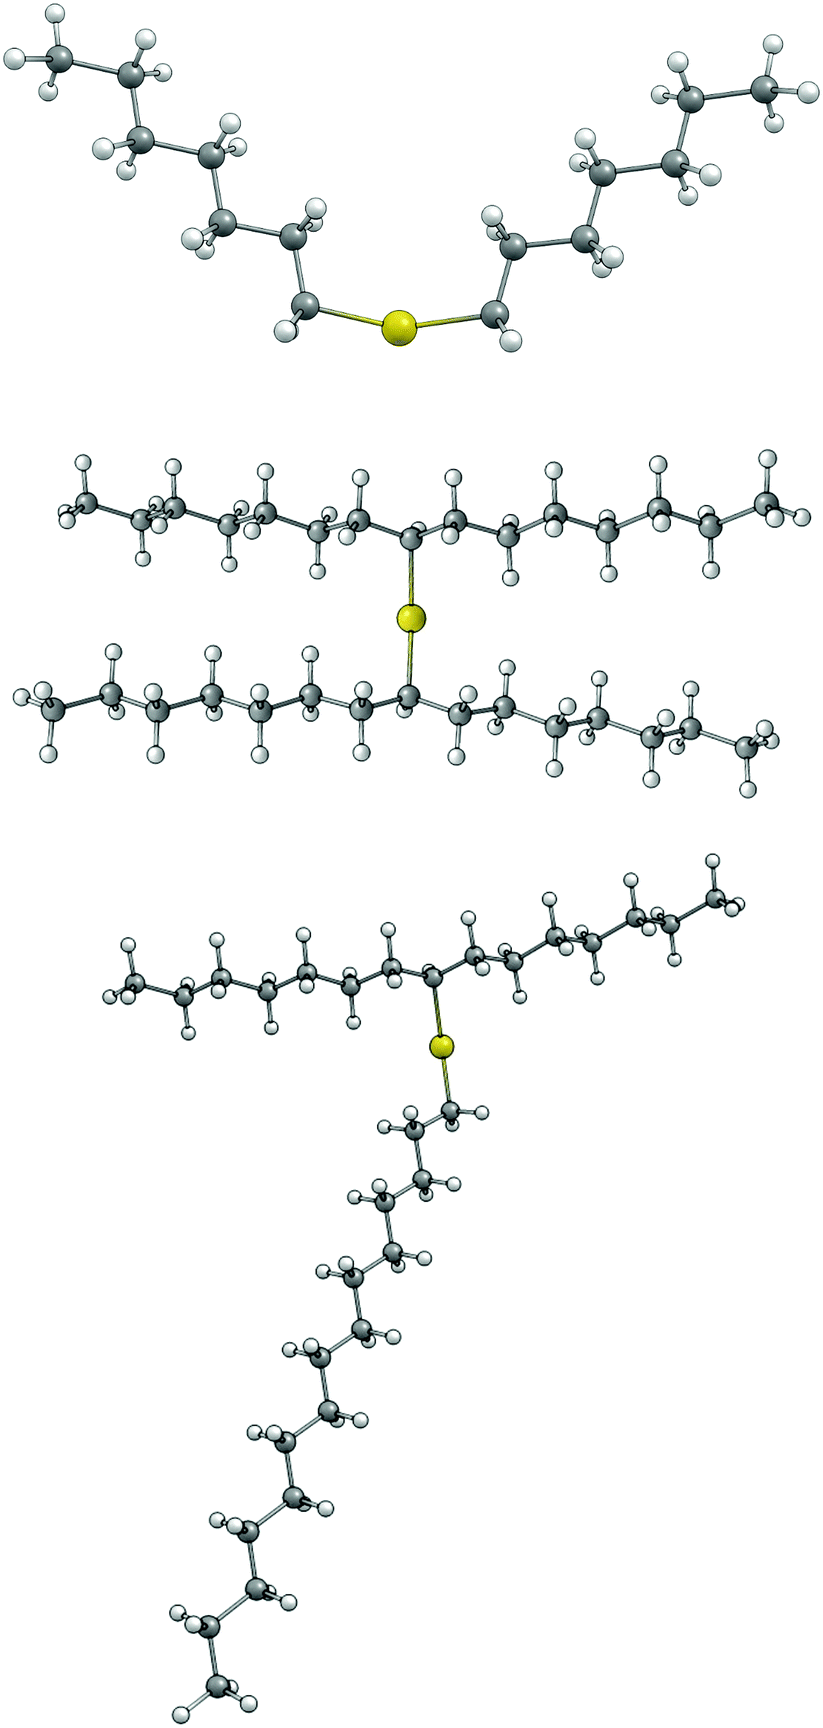 Density Functional Theory Modeling Of C Au Chemical Bond Formation In Gold Implanted Polyethylene Physical Chemistry Chemical Physics Rsc Publishing Doi 10 1039 C7cpk